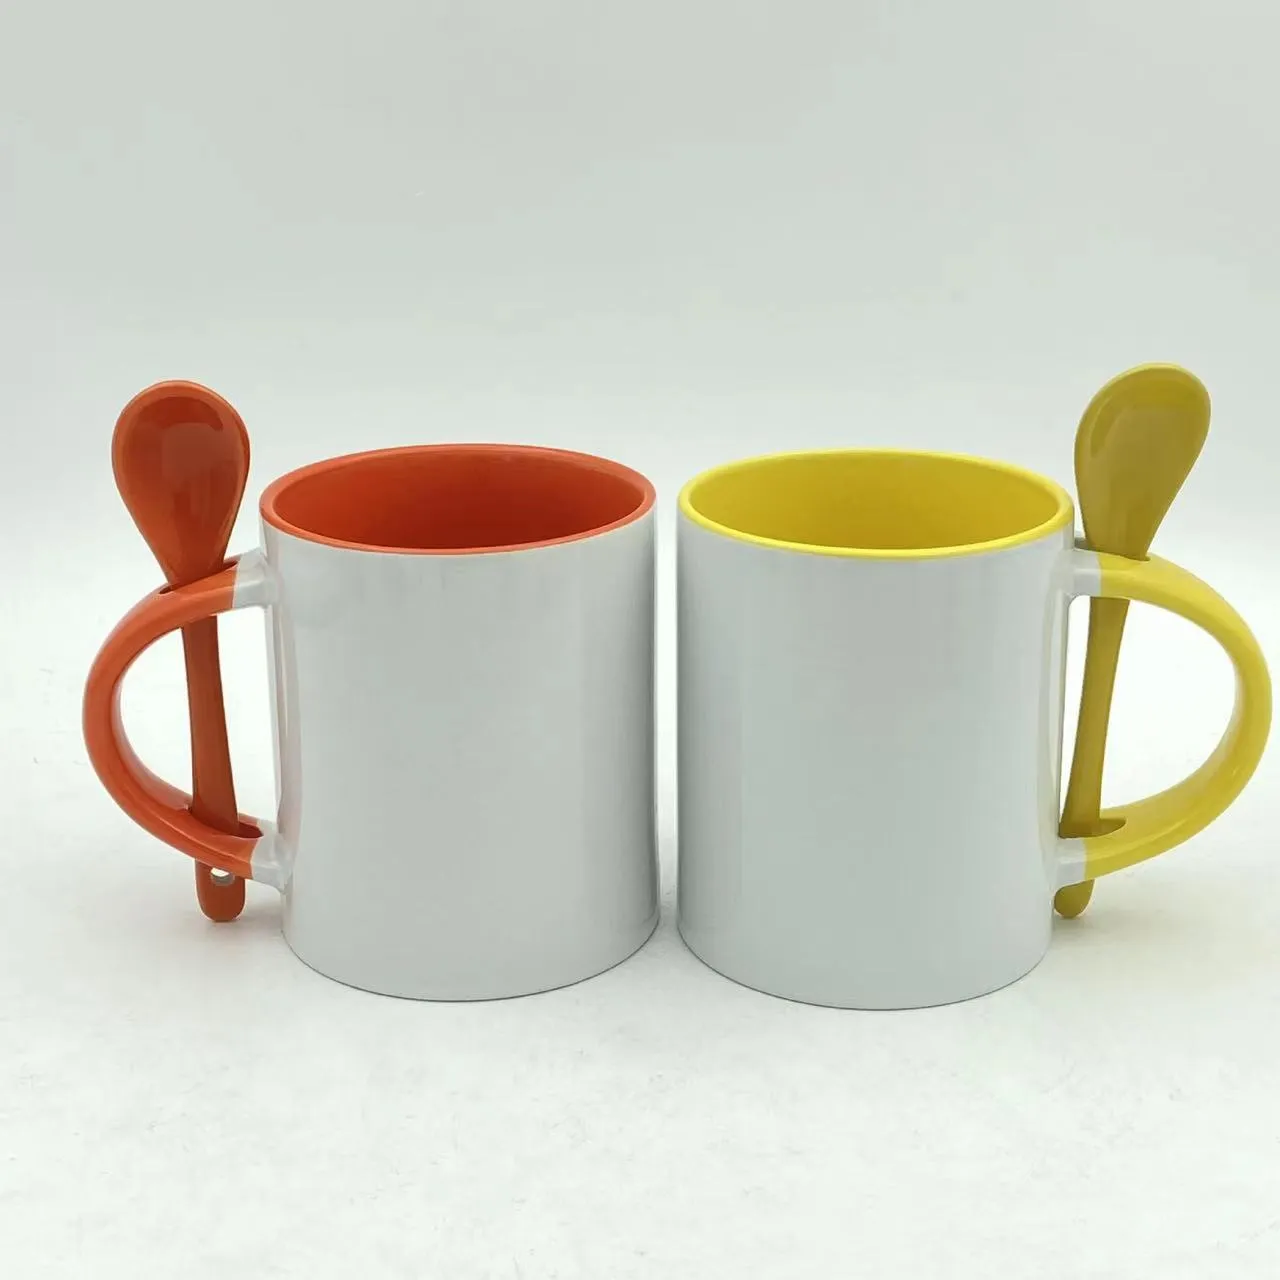 11oz Sublimation Cup Blank Coffee Mug /Cup Blank White Mugs/Cups, Case of  12 Mug